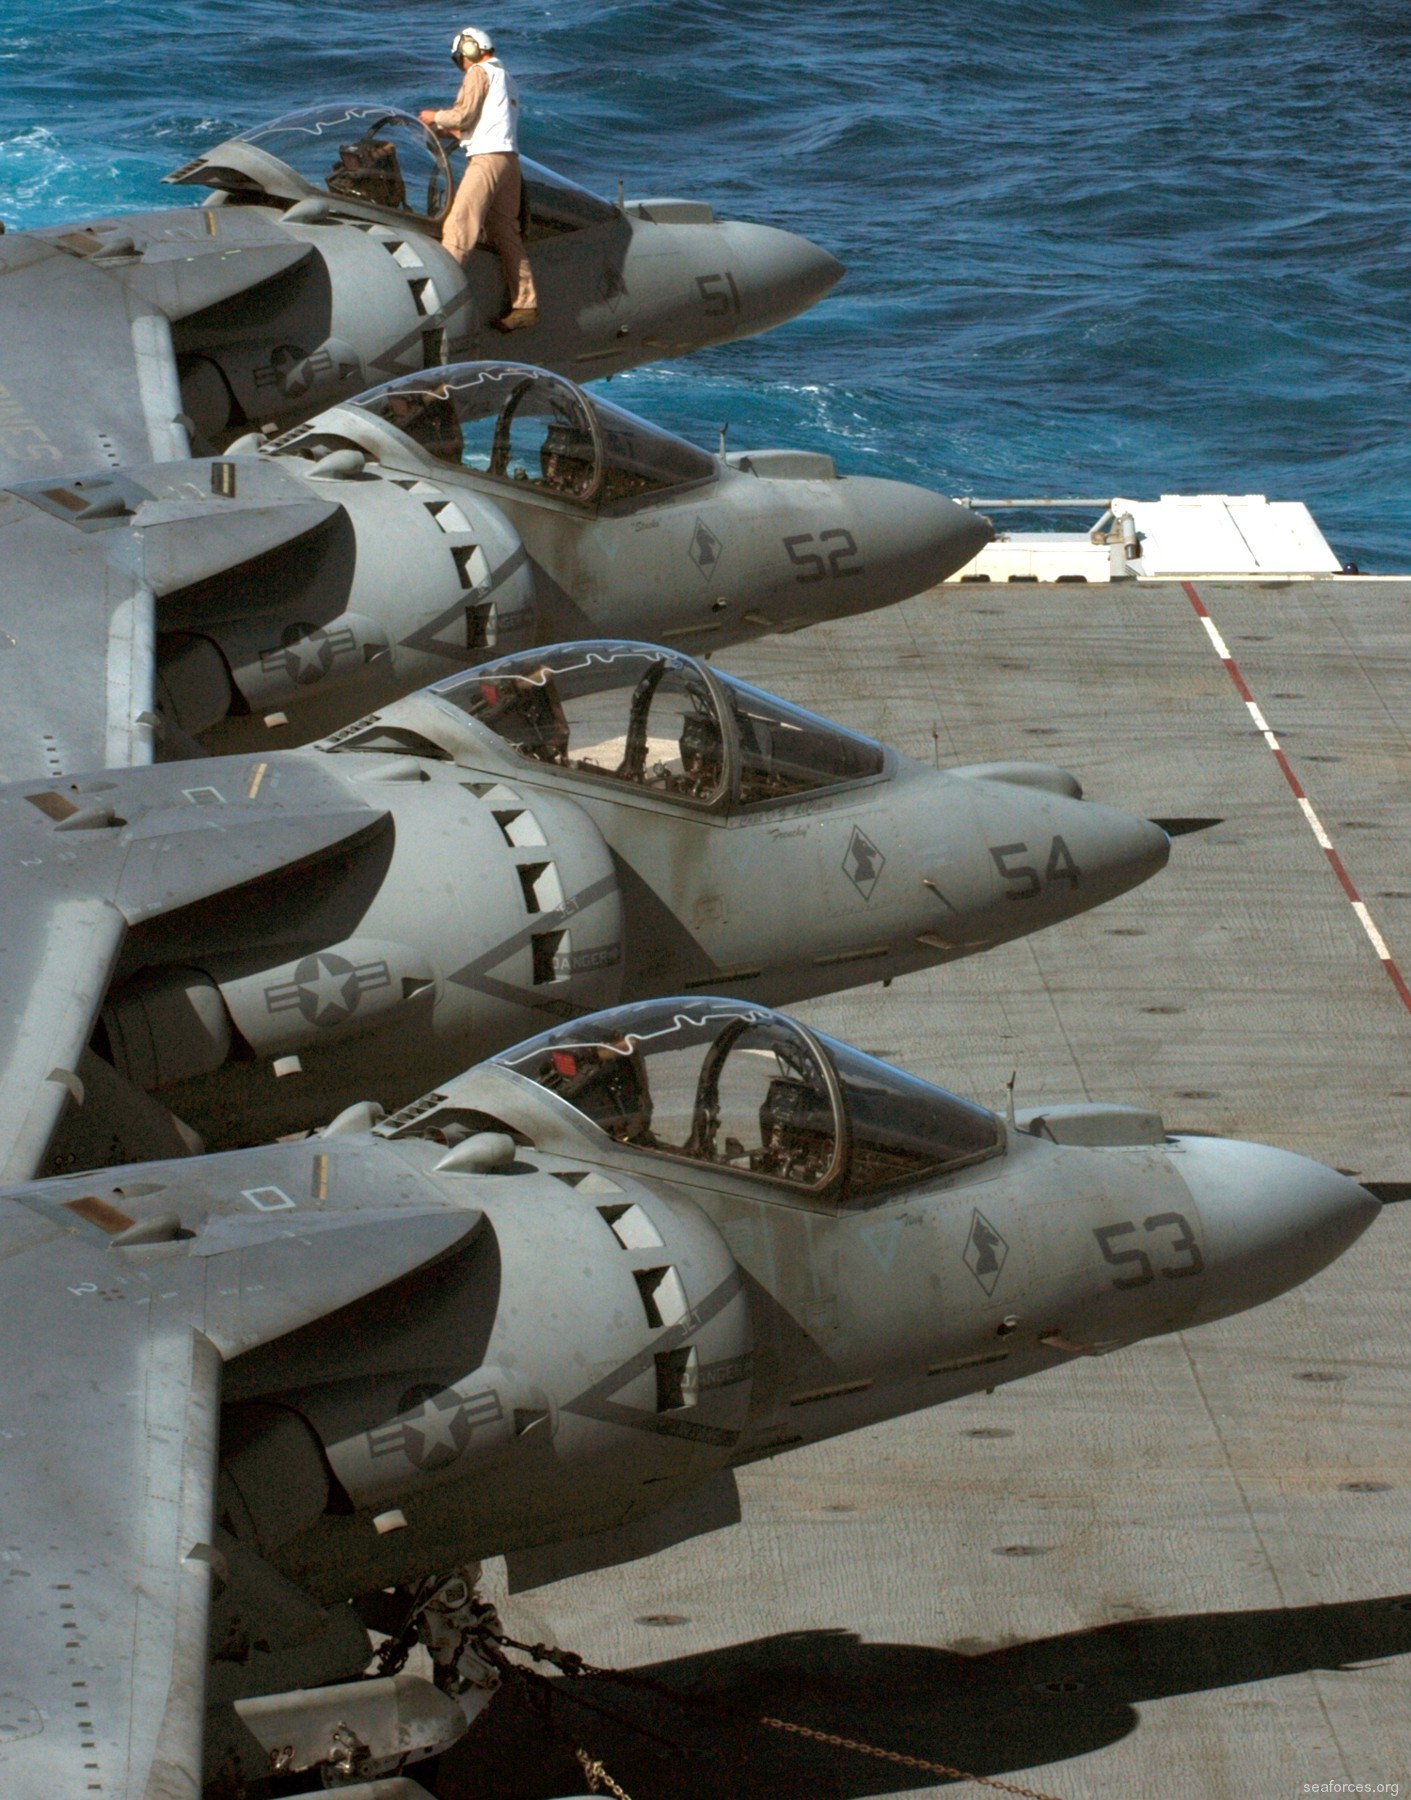 vma-231 ace of spades av-8b harrier marine attack squadron 90 uss iwo jima